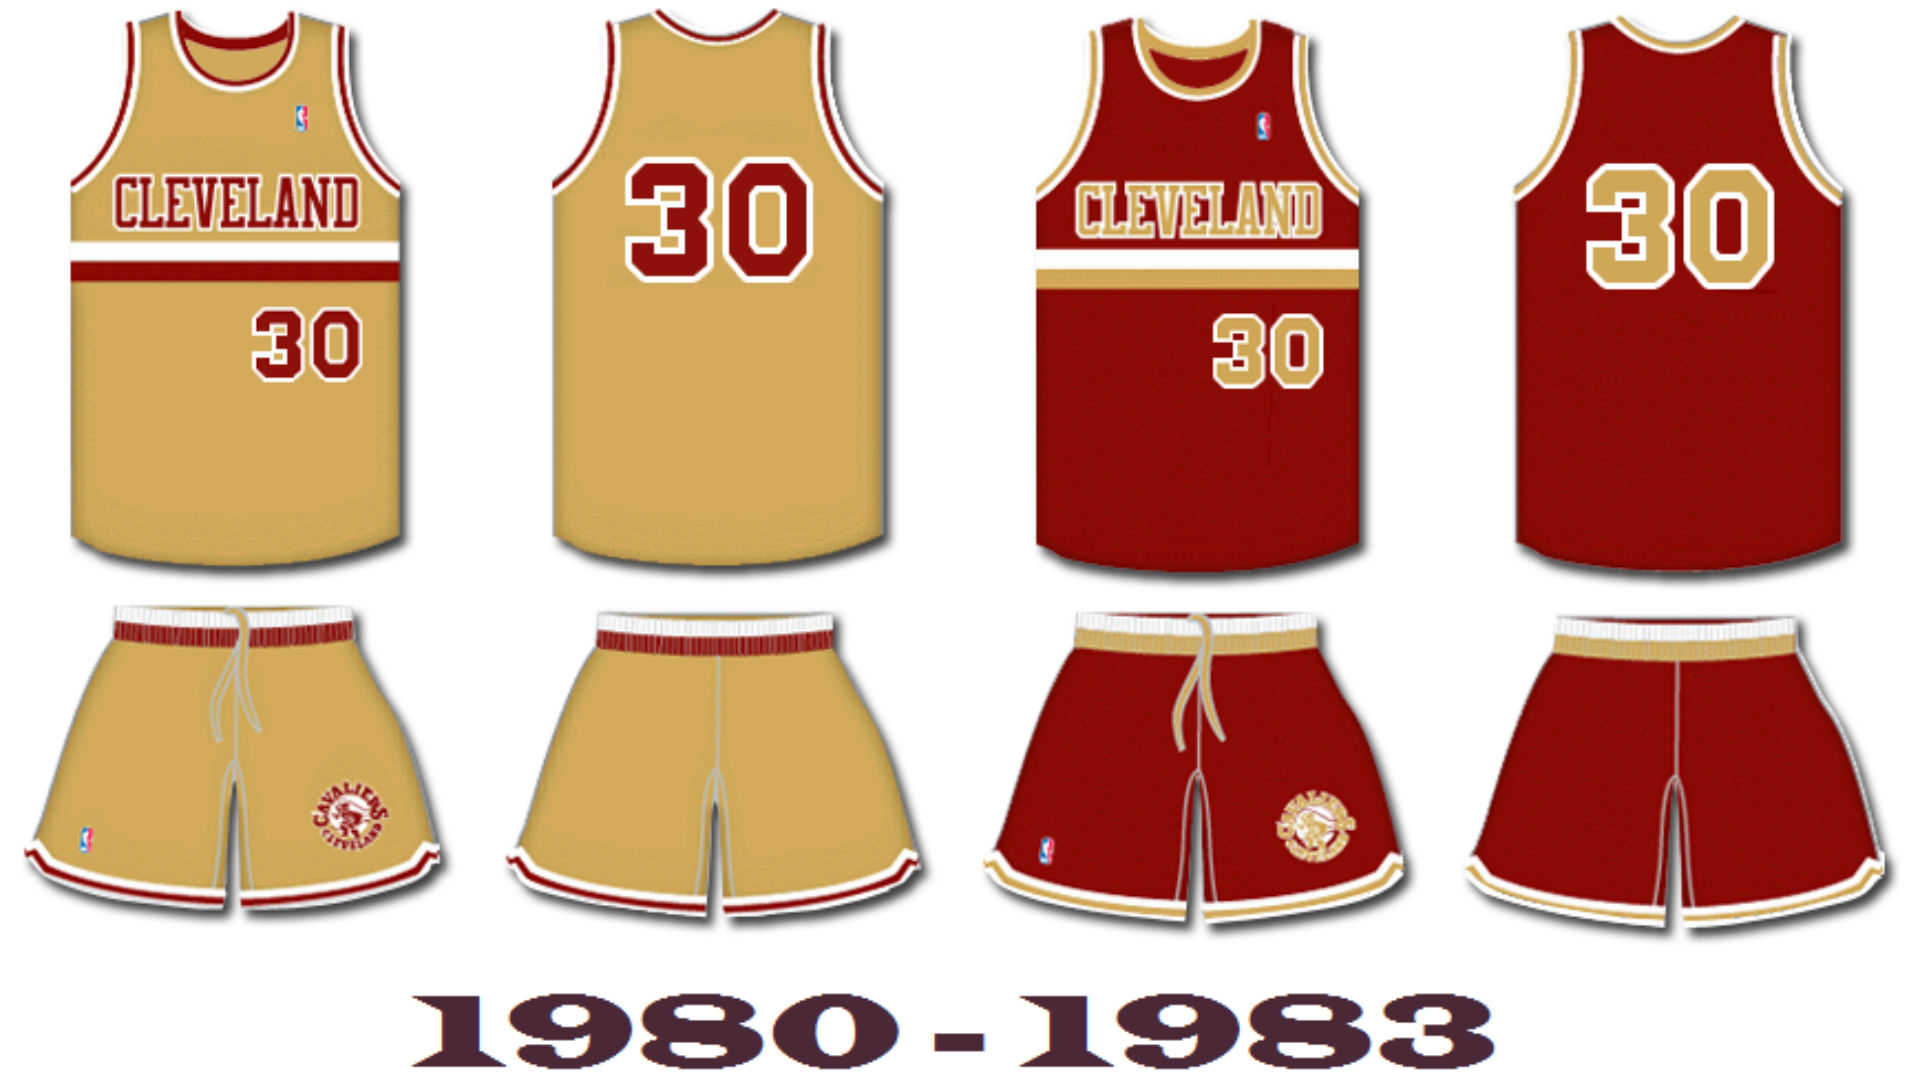 Cleveland Cavaliers uniform history 